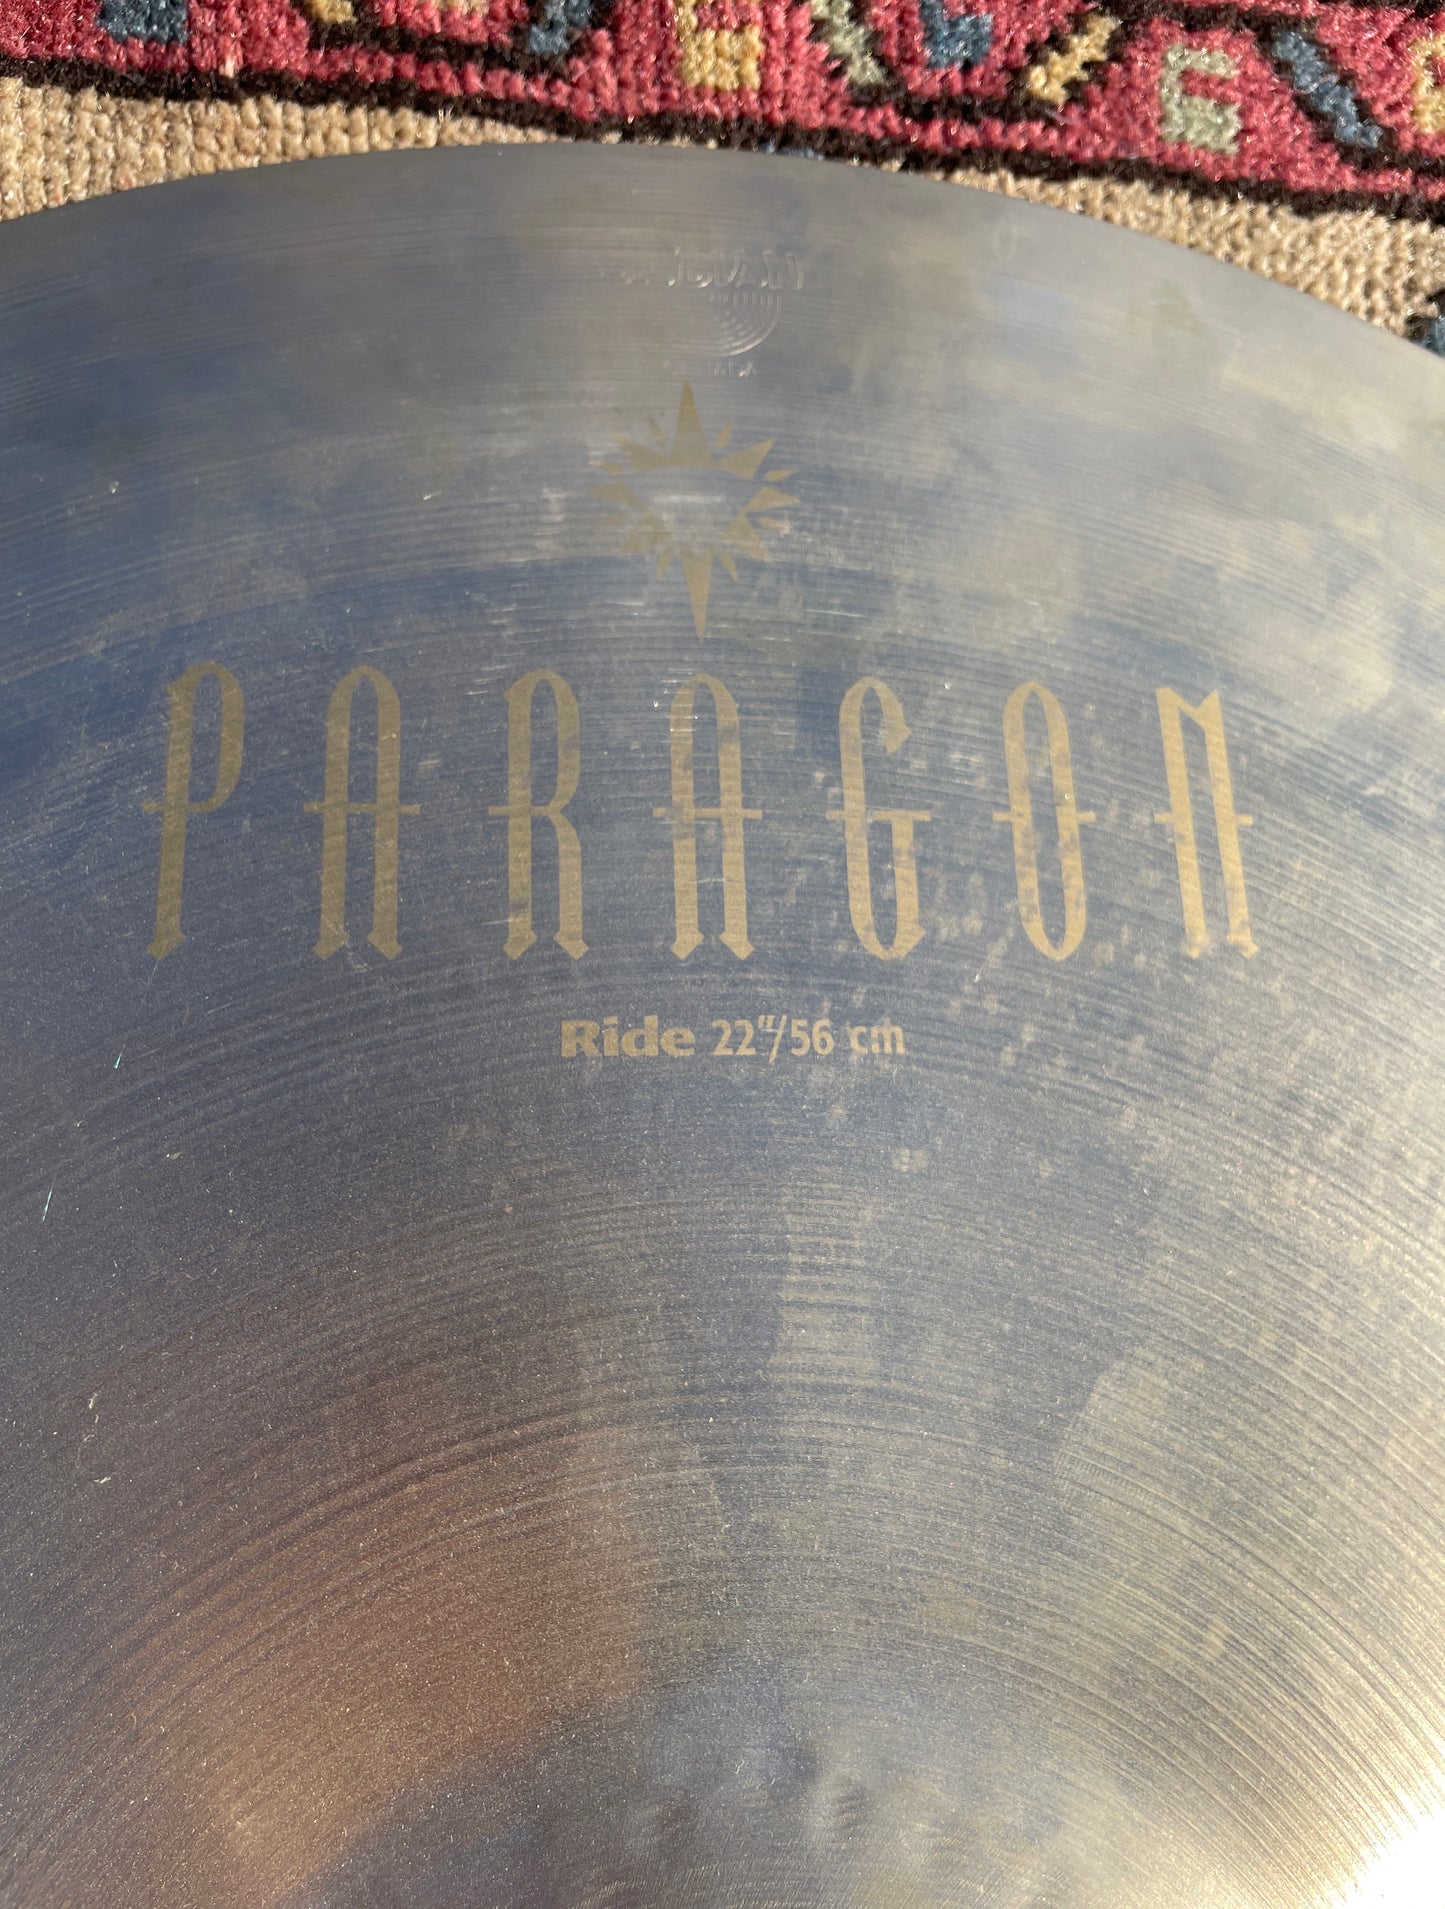 22" Sabian Paragon Ride Cymbal 3746g Neil Peart